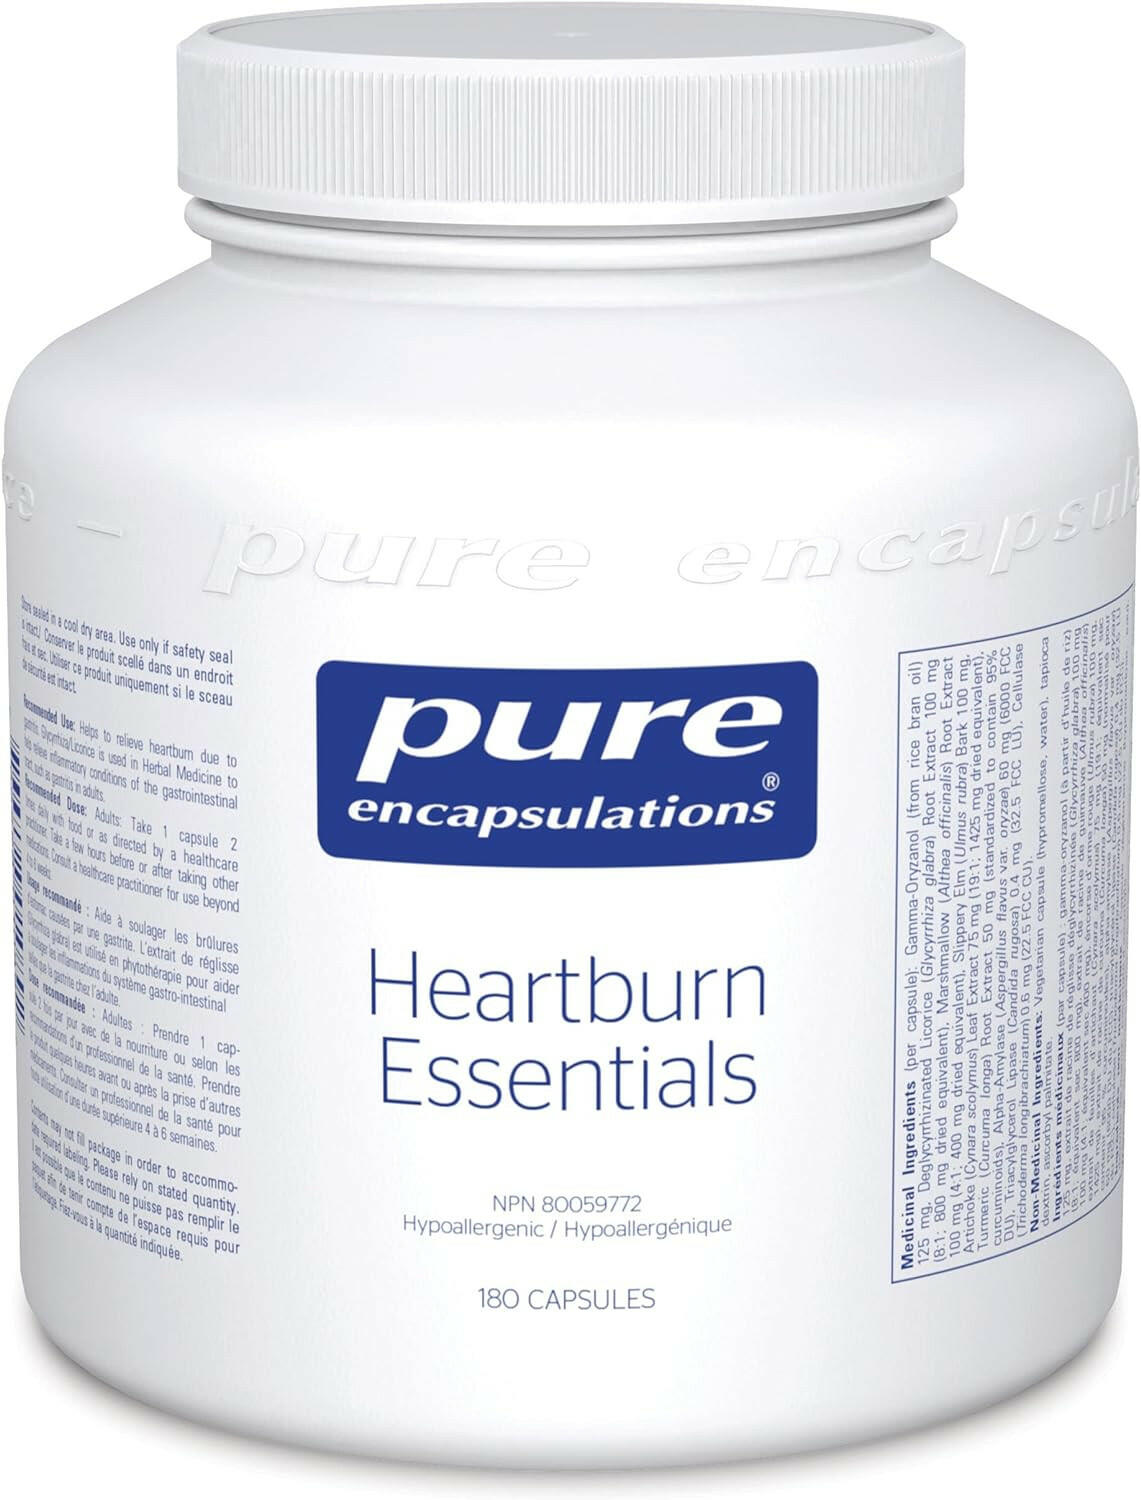 Pure Encapsulations - Heartburn Essentials (180 caps)